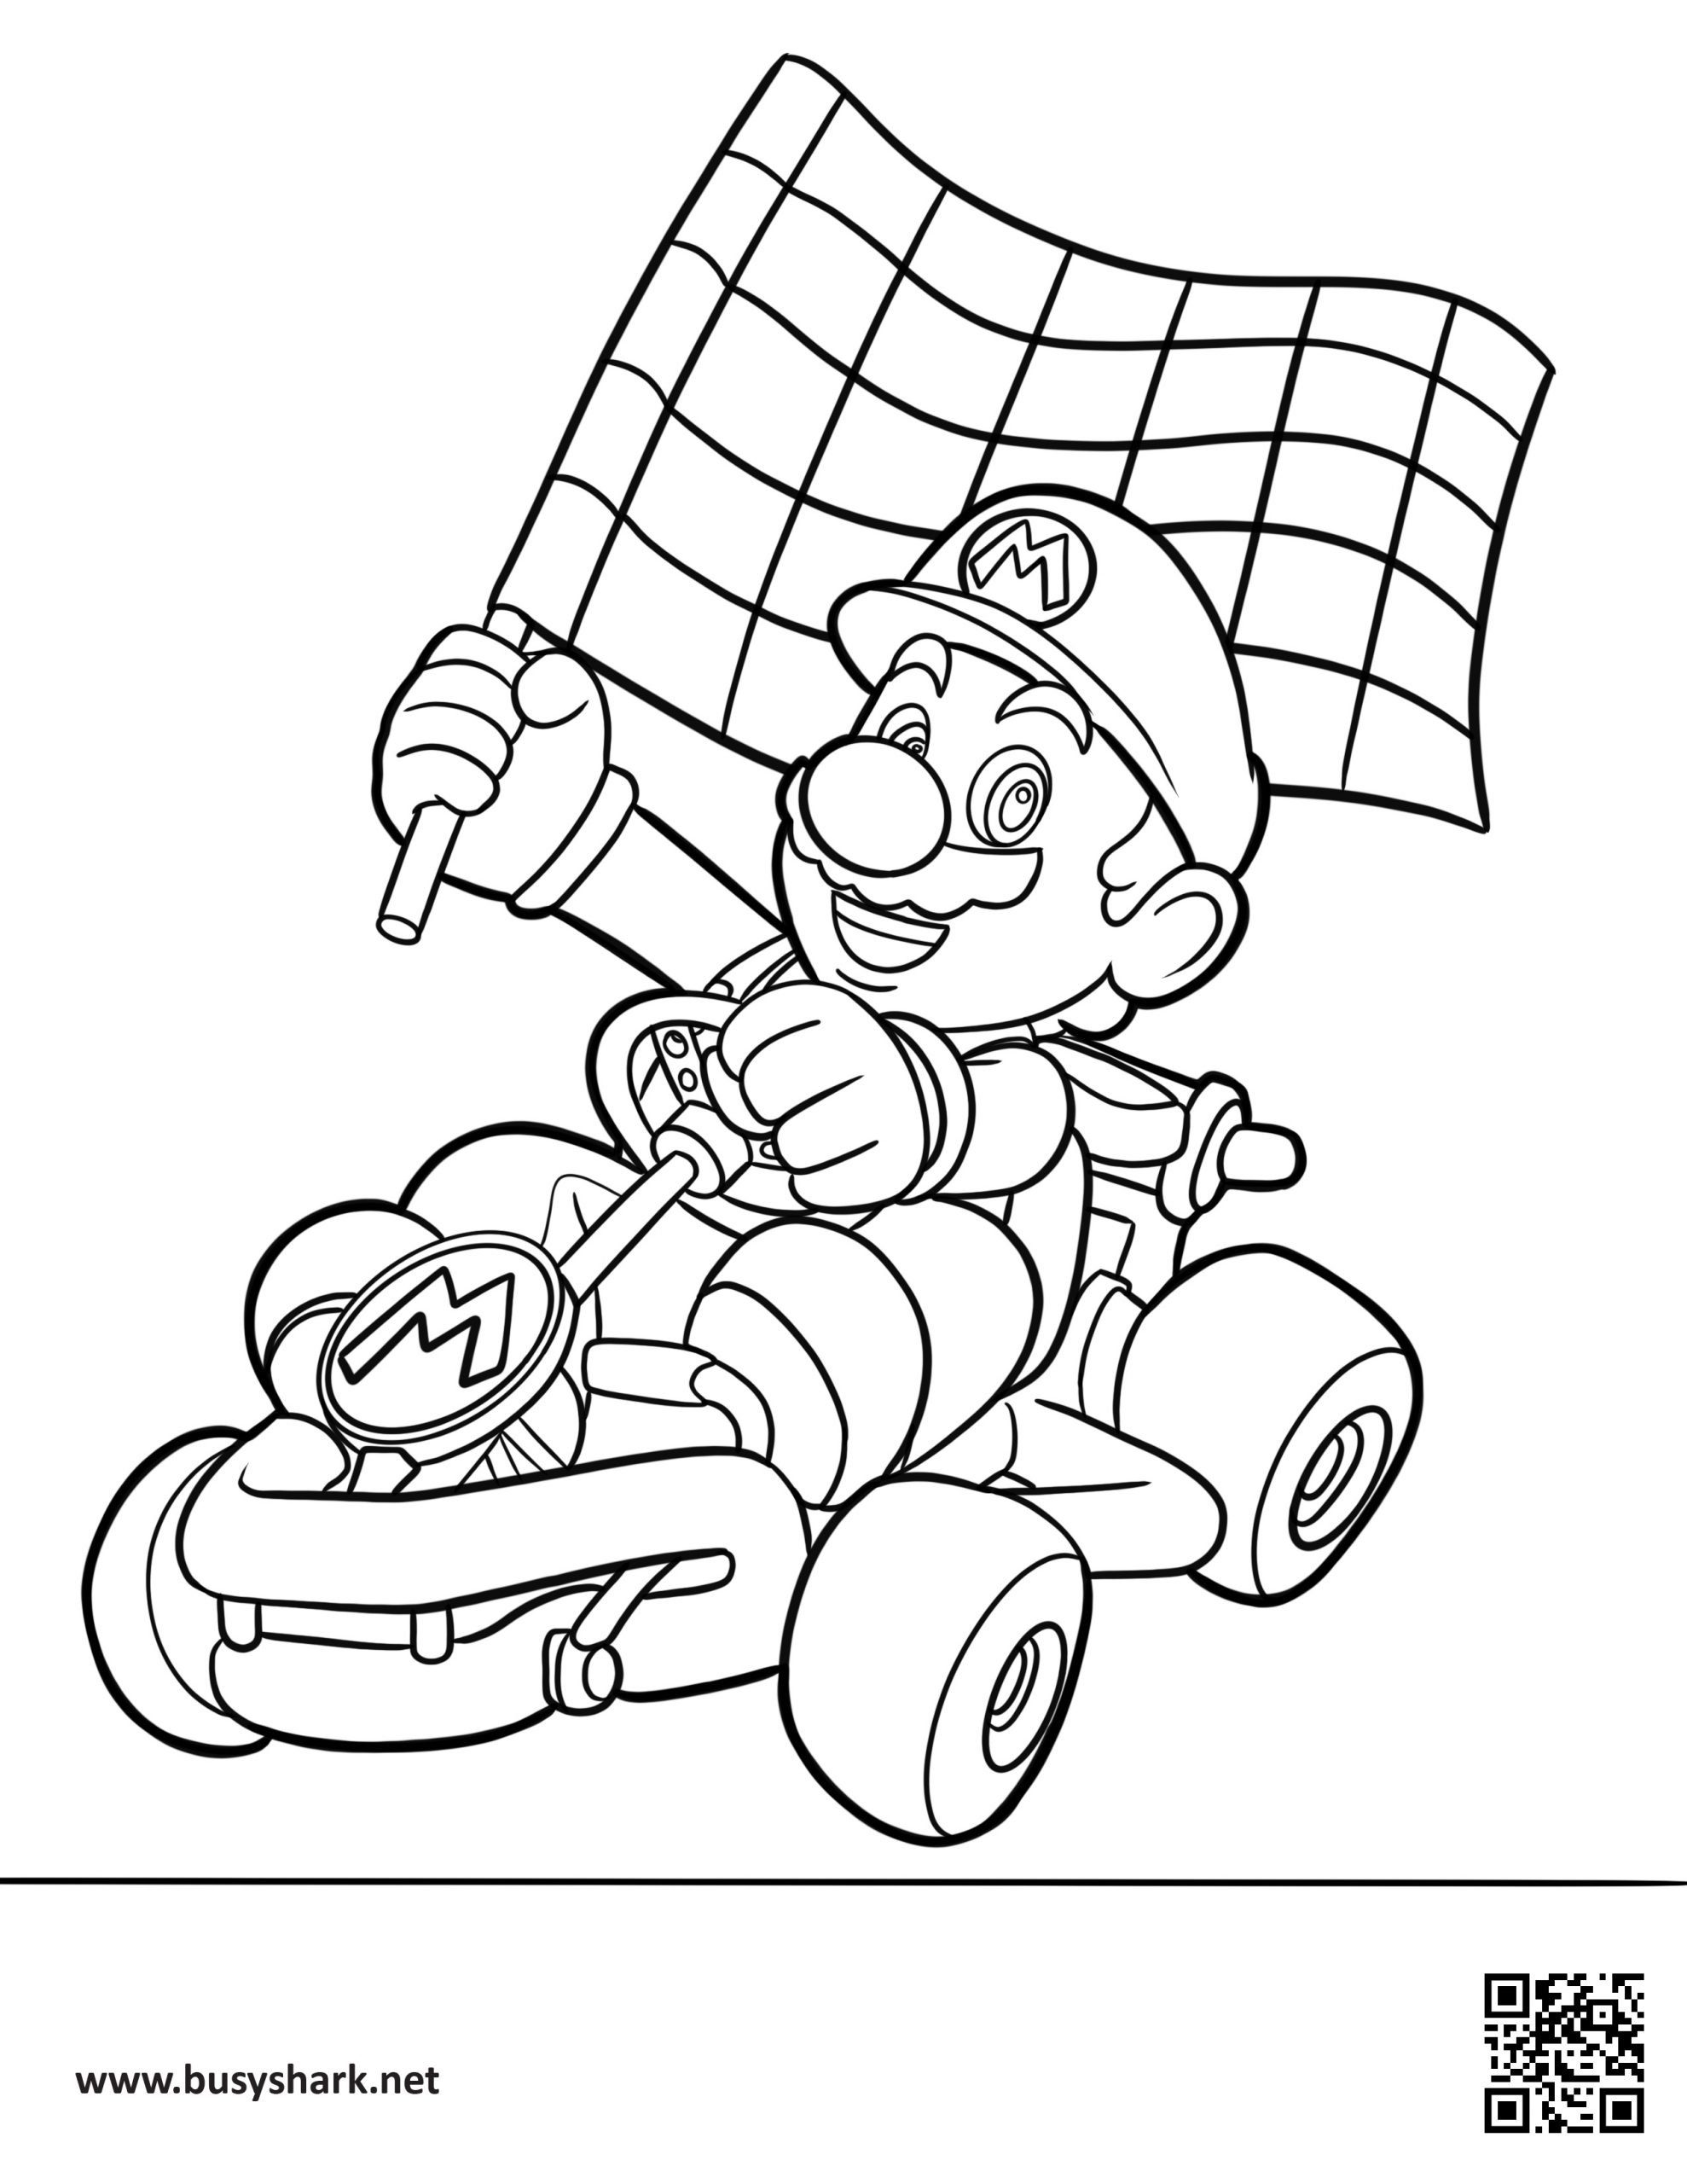 Mario kart coloring page